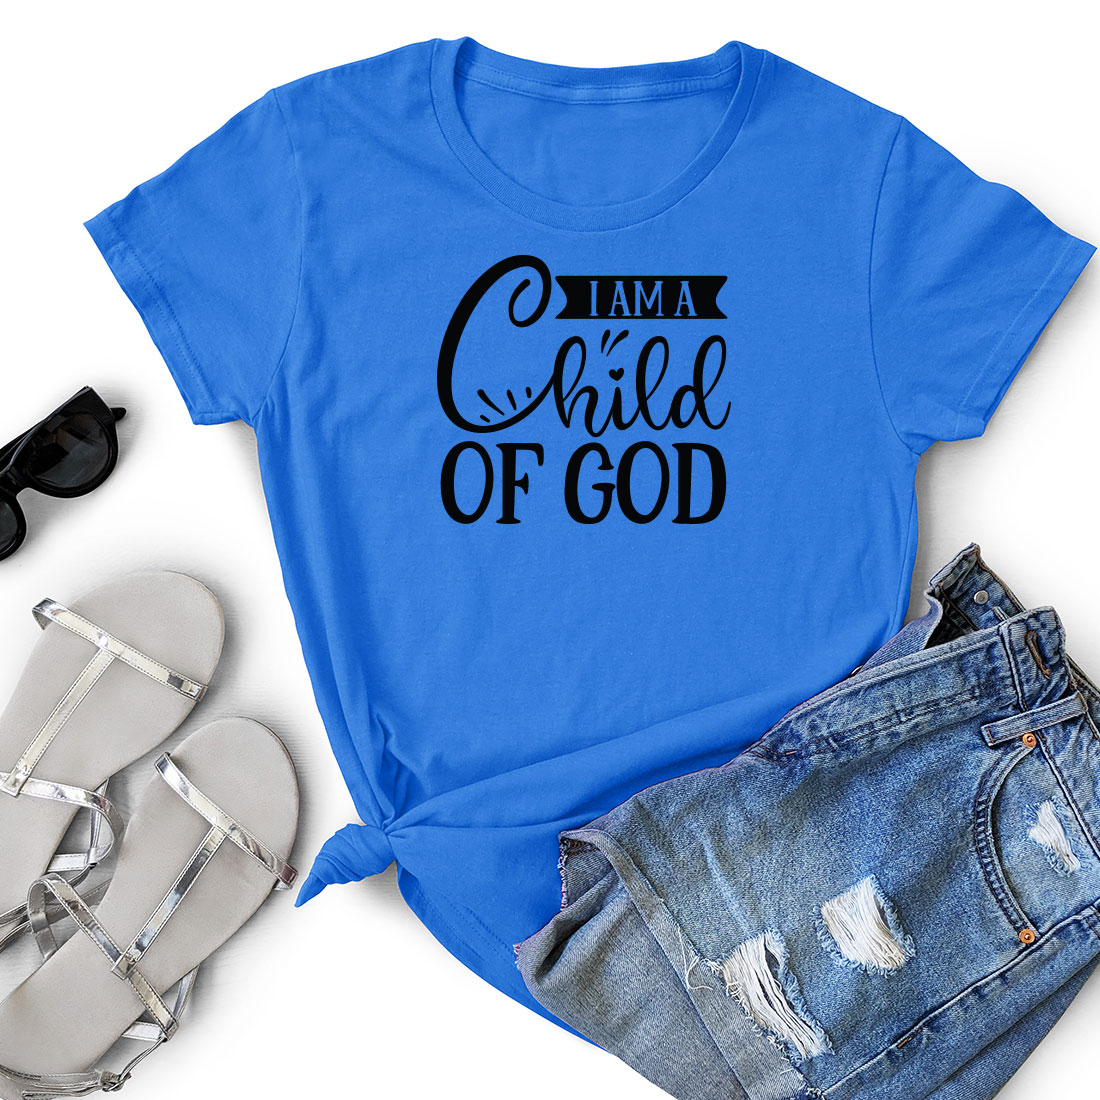 T - shirt that says i am a child of god.